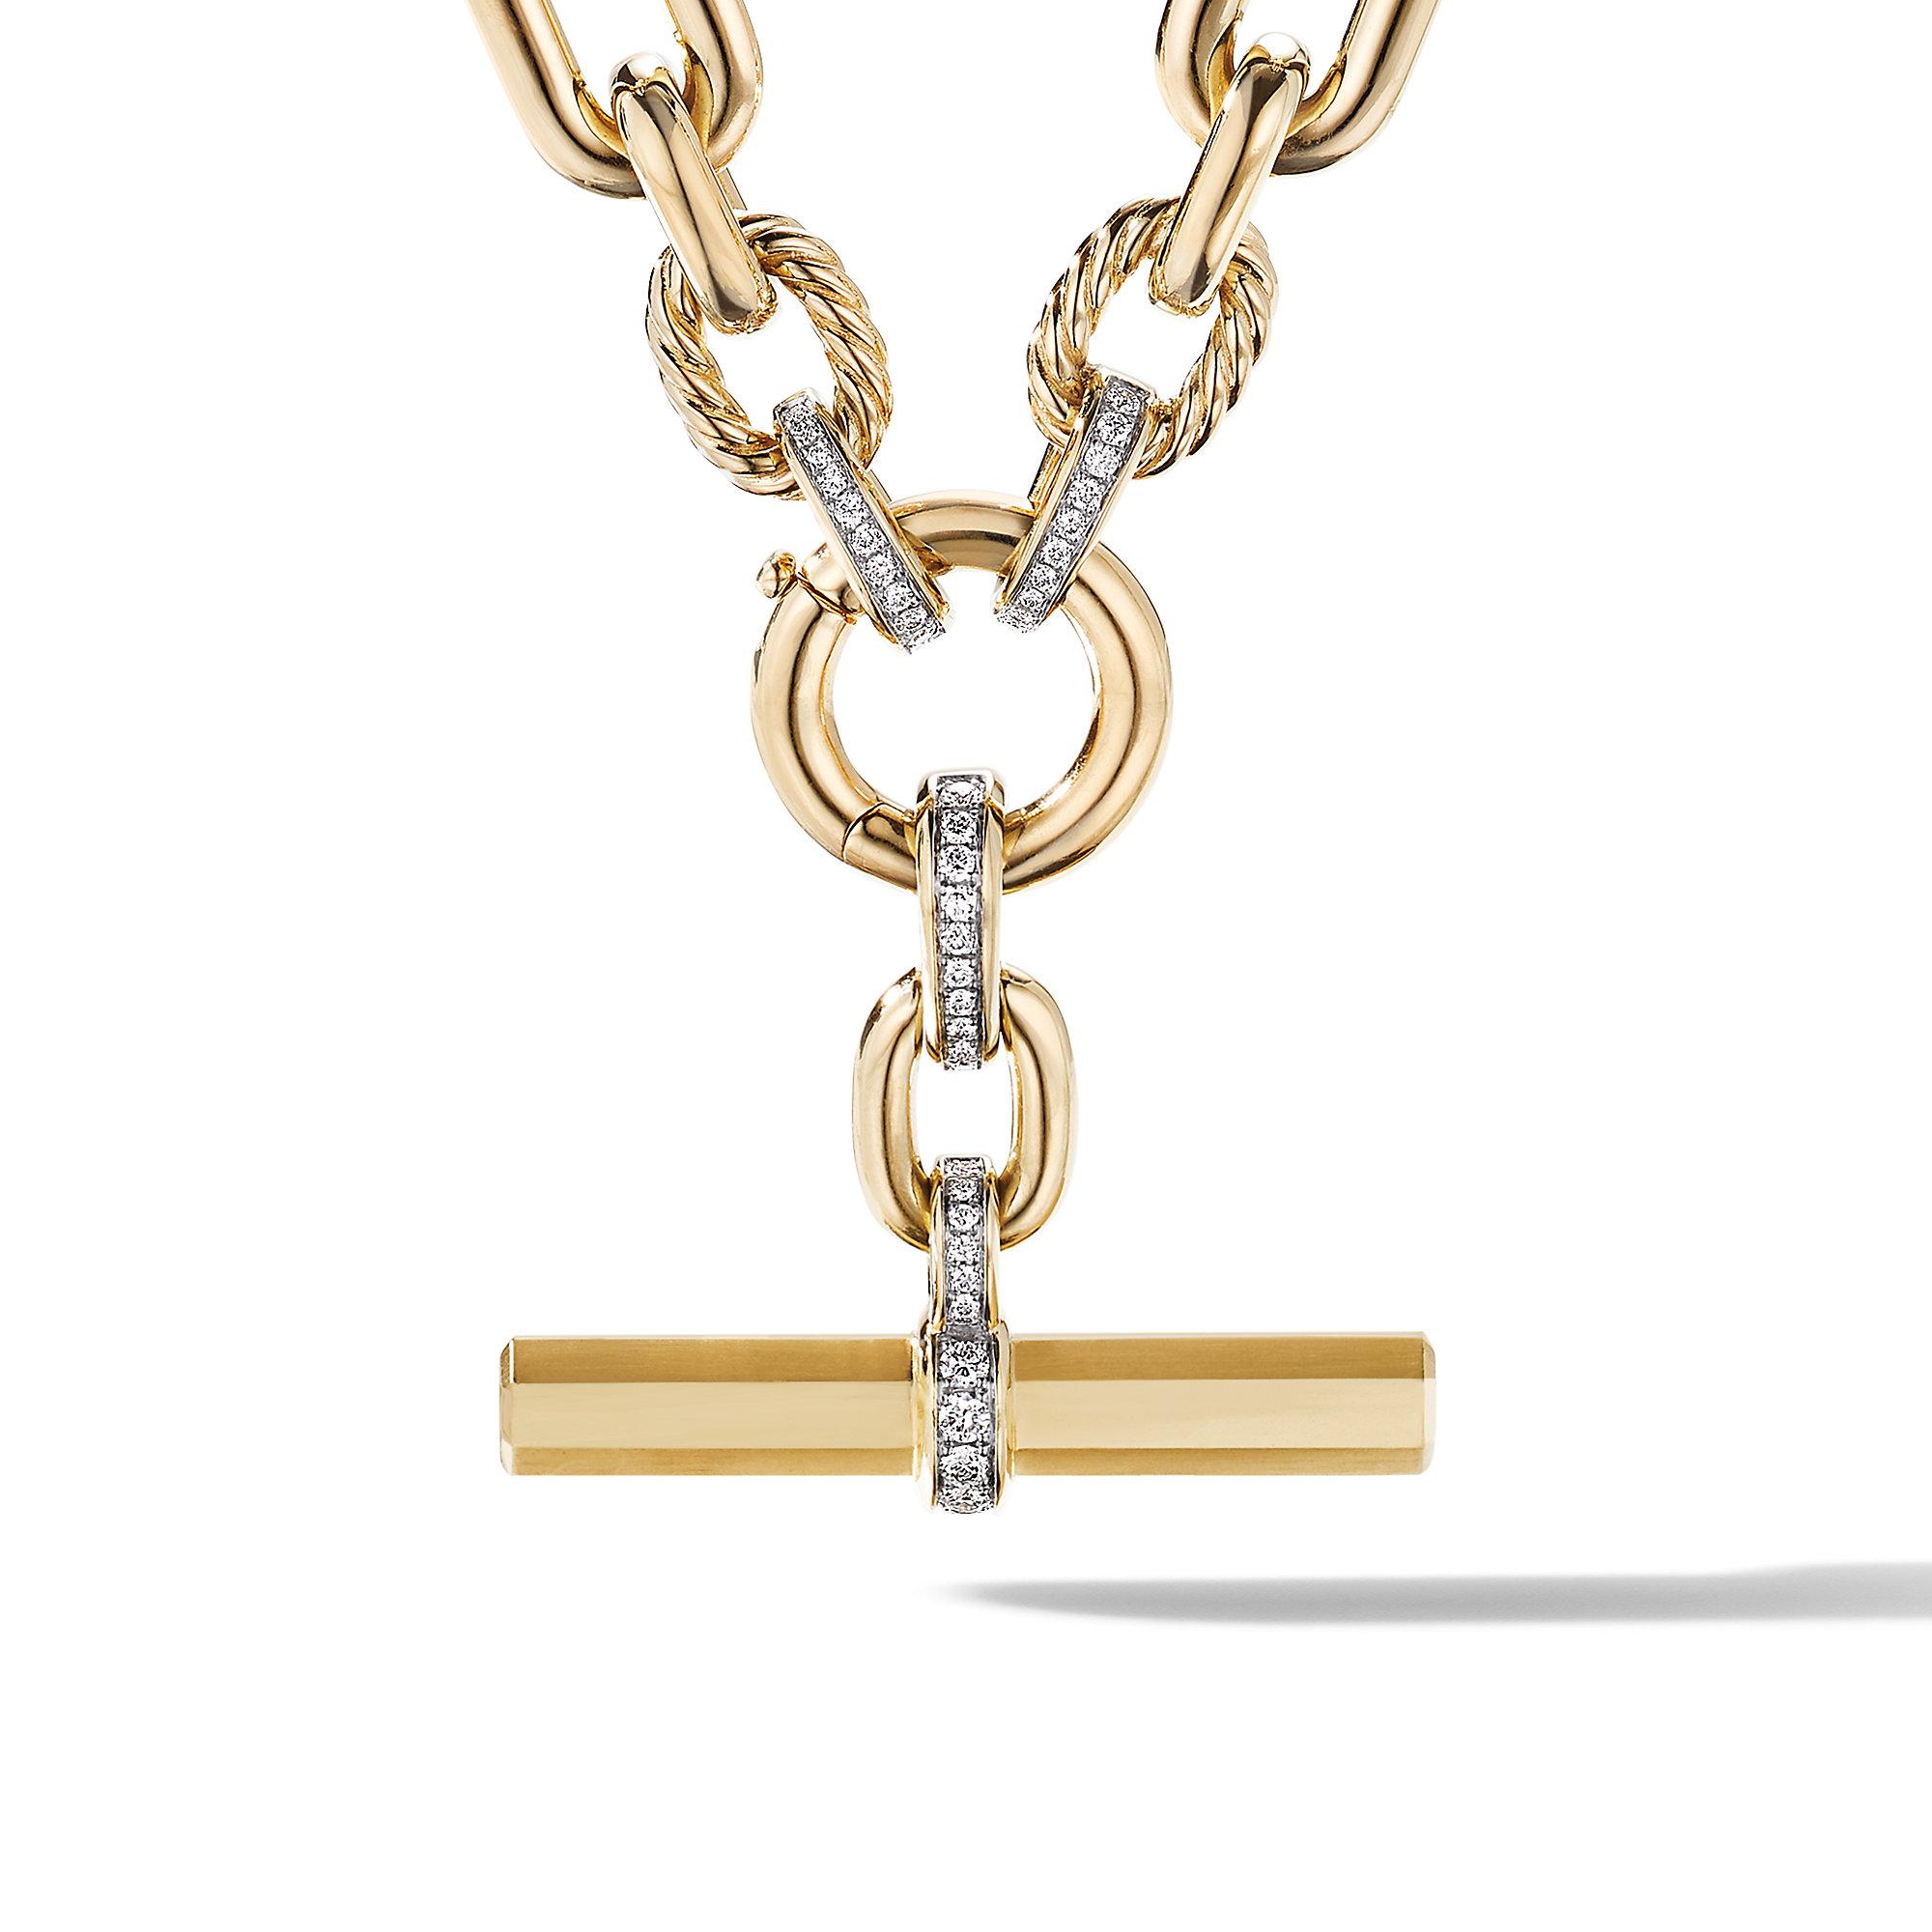 David Yurman Lexington Chain Link Necklace in 18k Yellow Gold with Diamonds